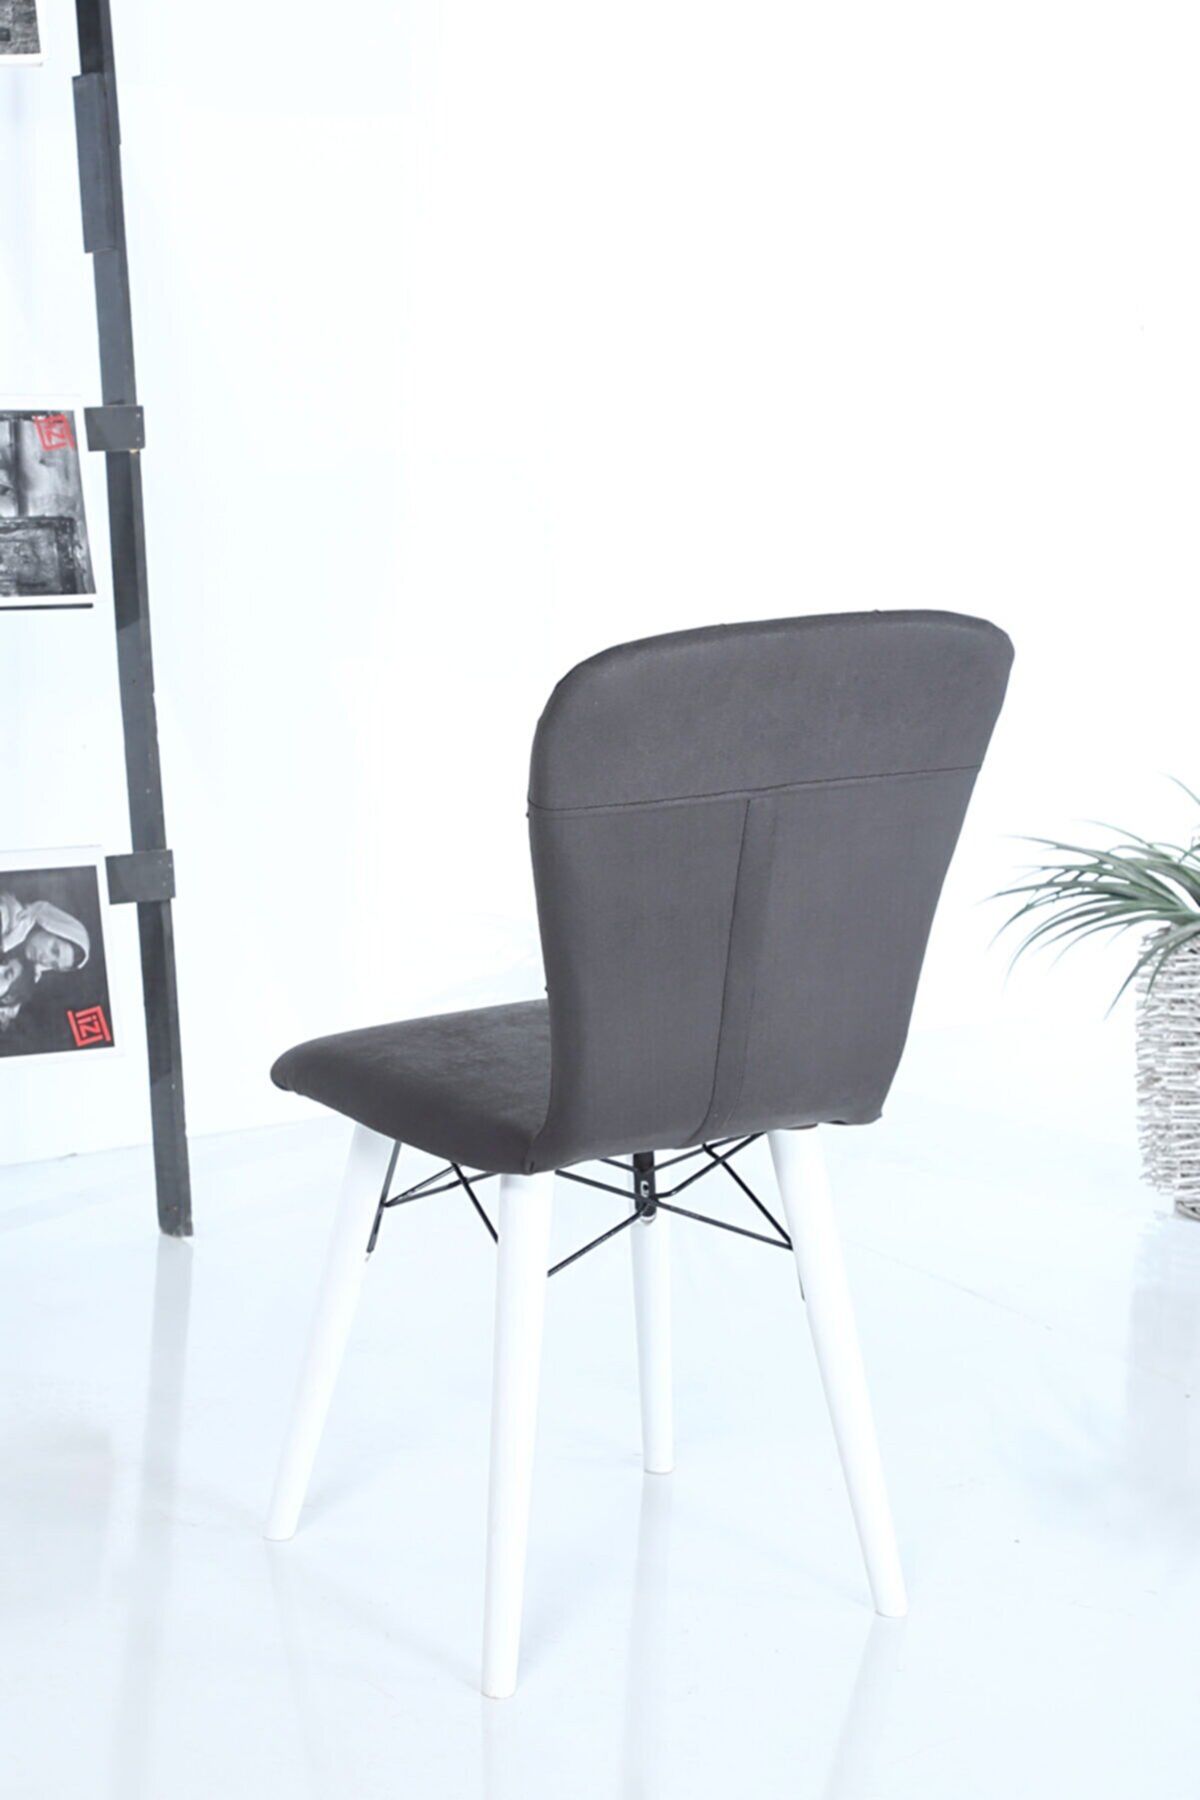 Set masa extensibila cu 6 scaune tapitate Homs marmorat alb  250-30650 bej- negru 170 x 80 cm